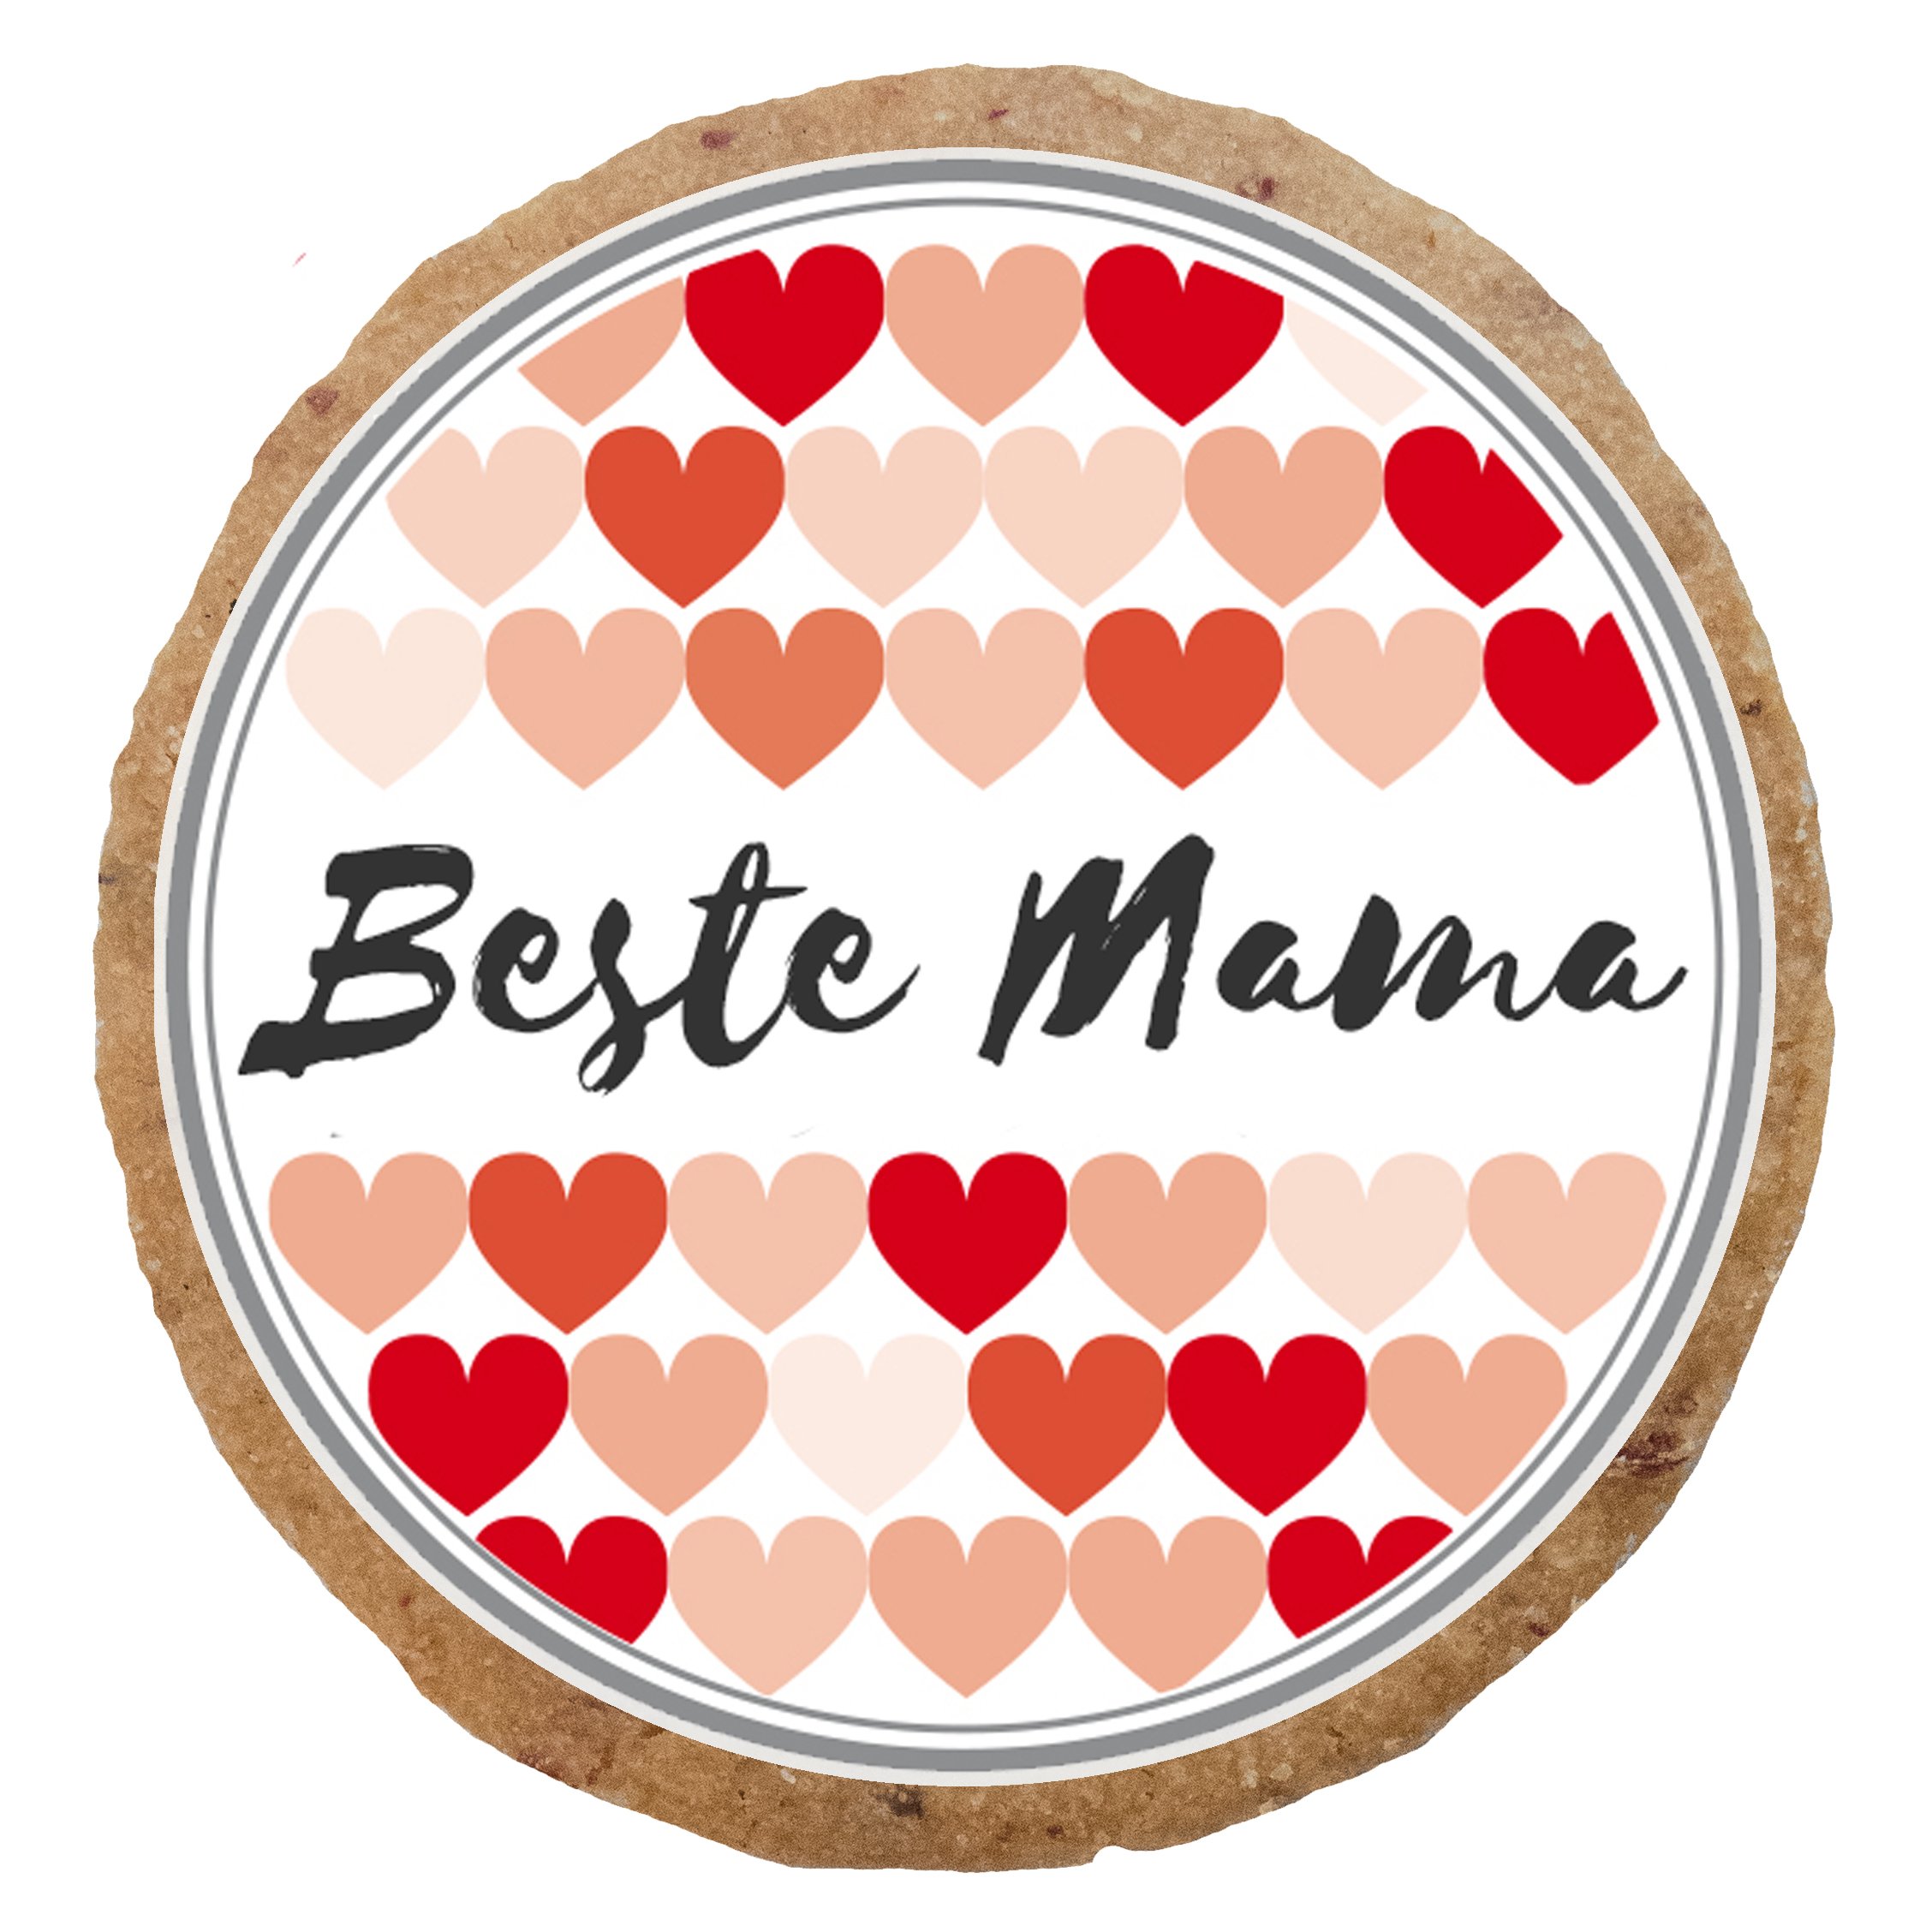 "Beste Mama" MotivKEKS